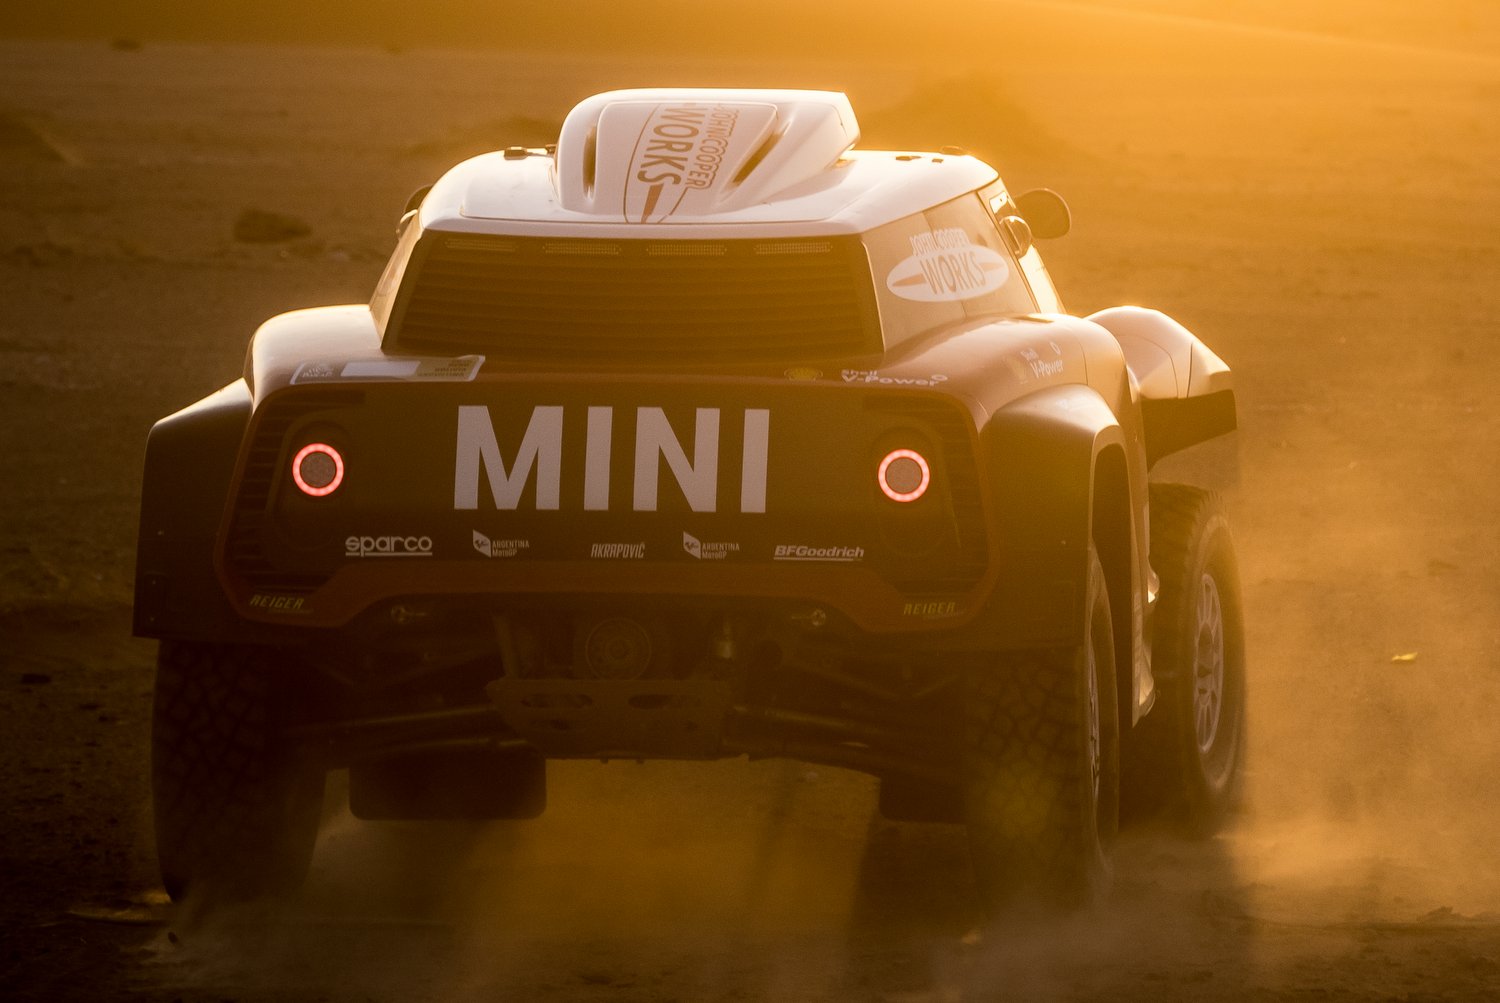 Kétféle versenyautóval indul a Dakaron a MINI 6